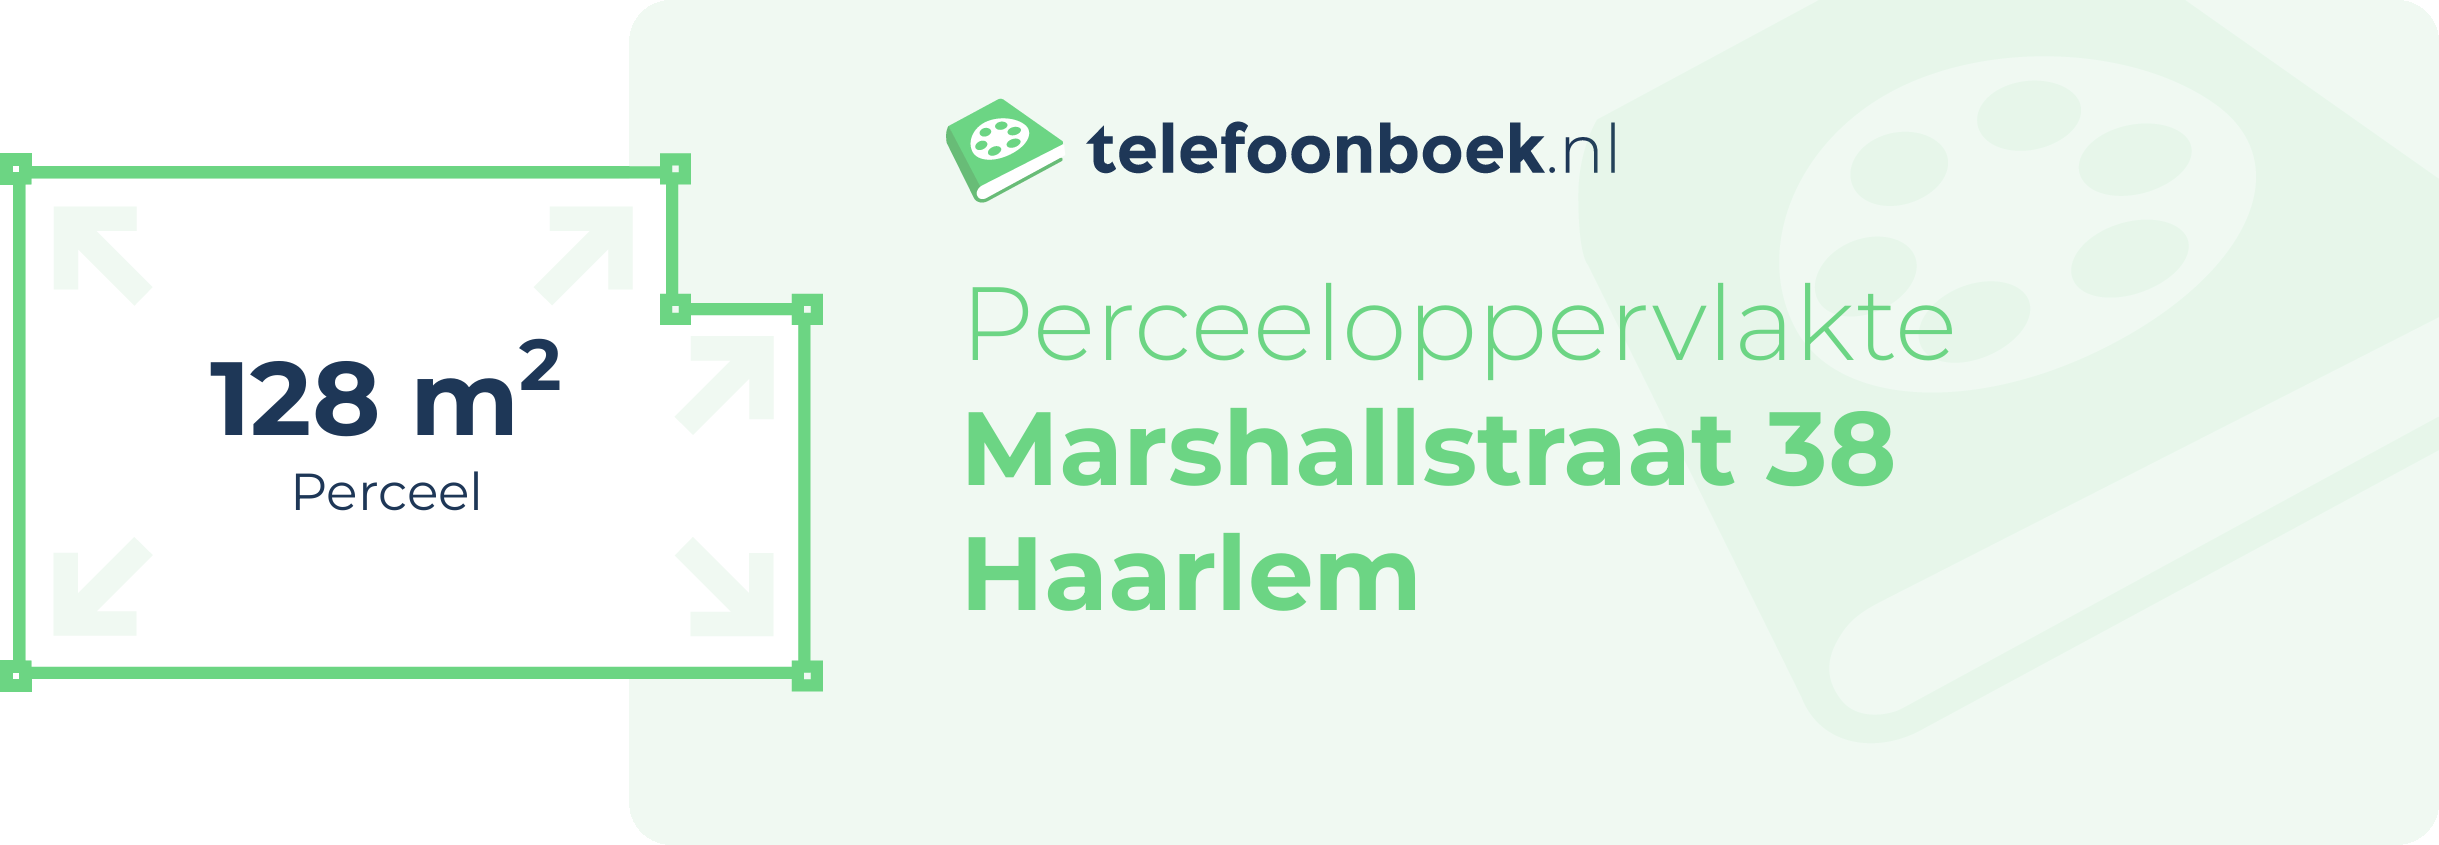 Perceeloppervlakte Marshallstraat 38 Haarlem